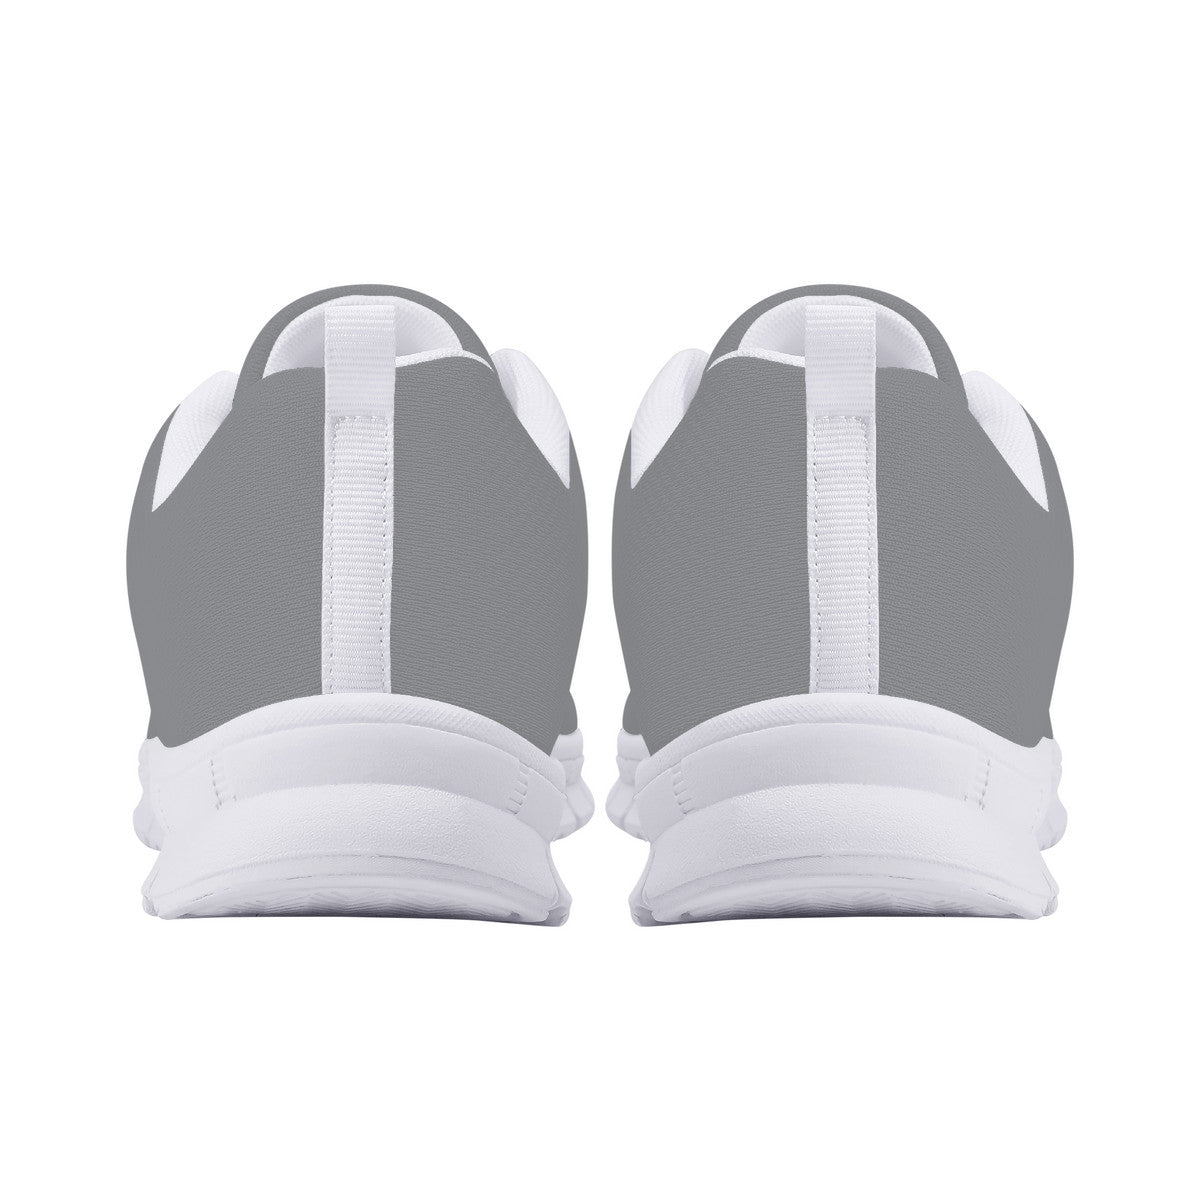 Custom Sneakers designed by Jeff V. - Shoe Zero